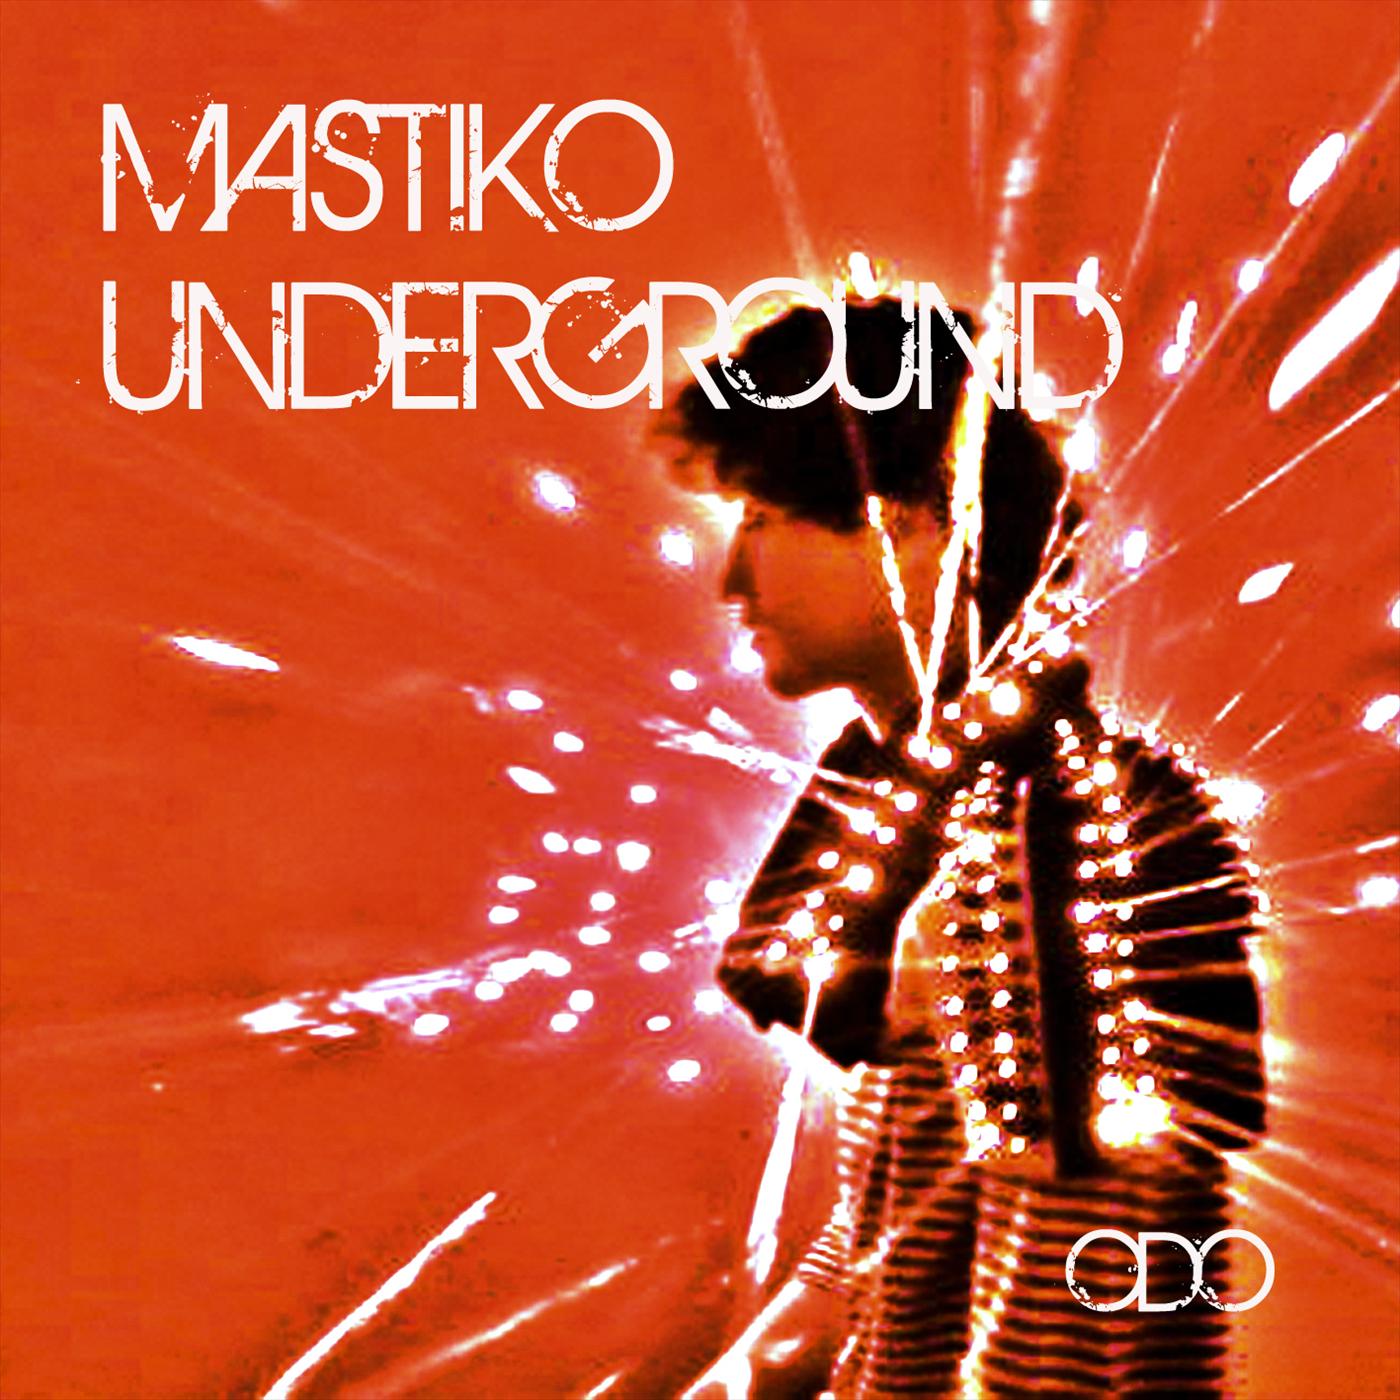 Mastiko Underground